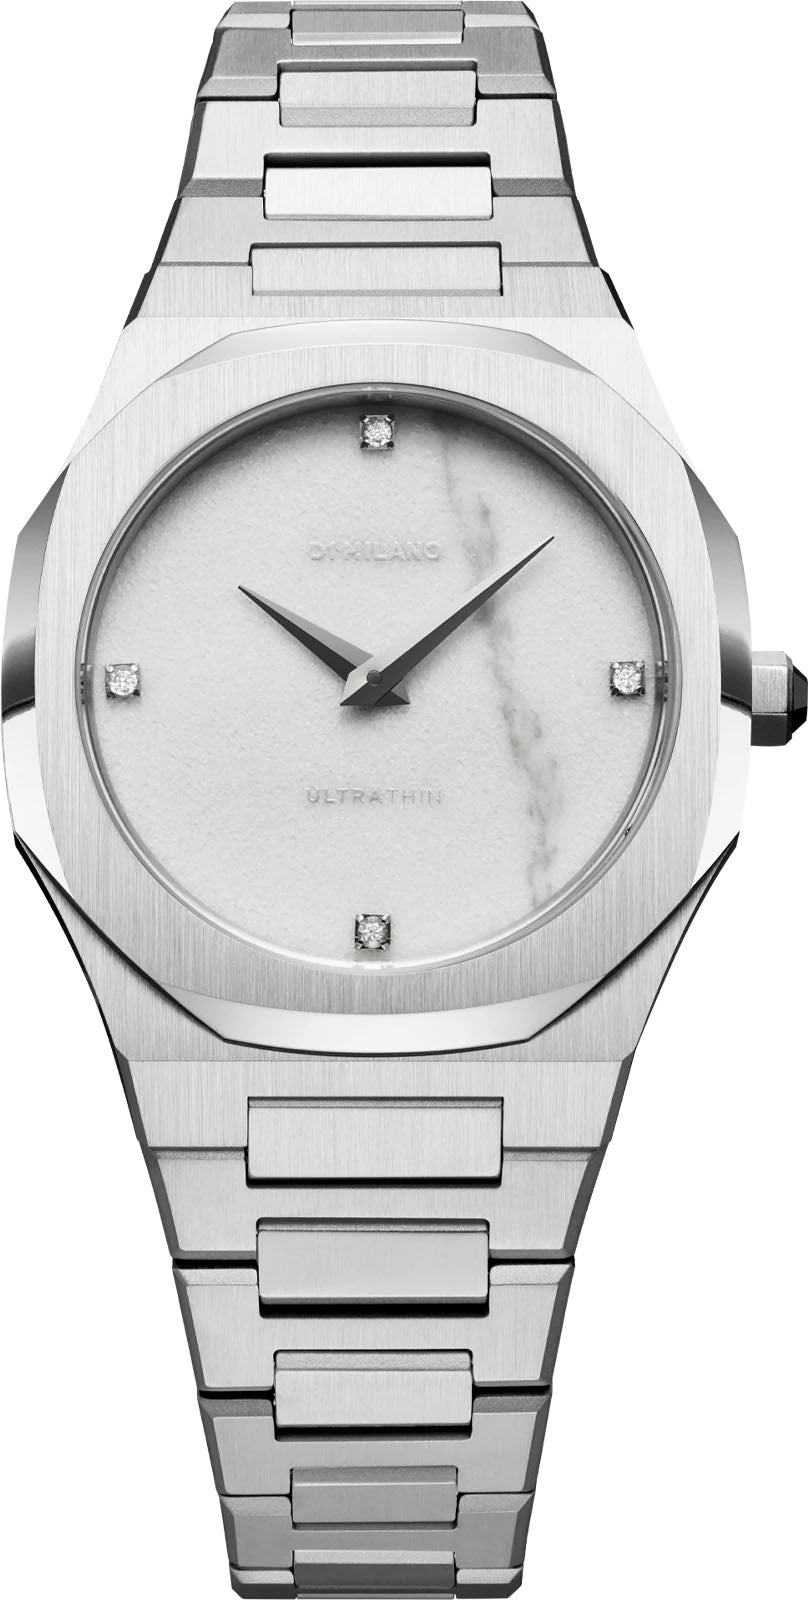 Photos - Wrist Watch Milano D1  Watch Ultra Thin Marble Silver - White DLM-113 